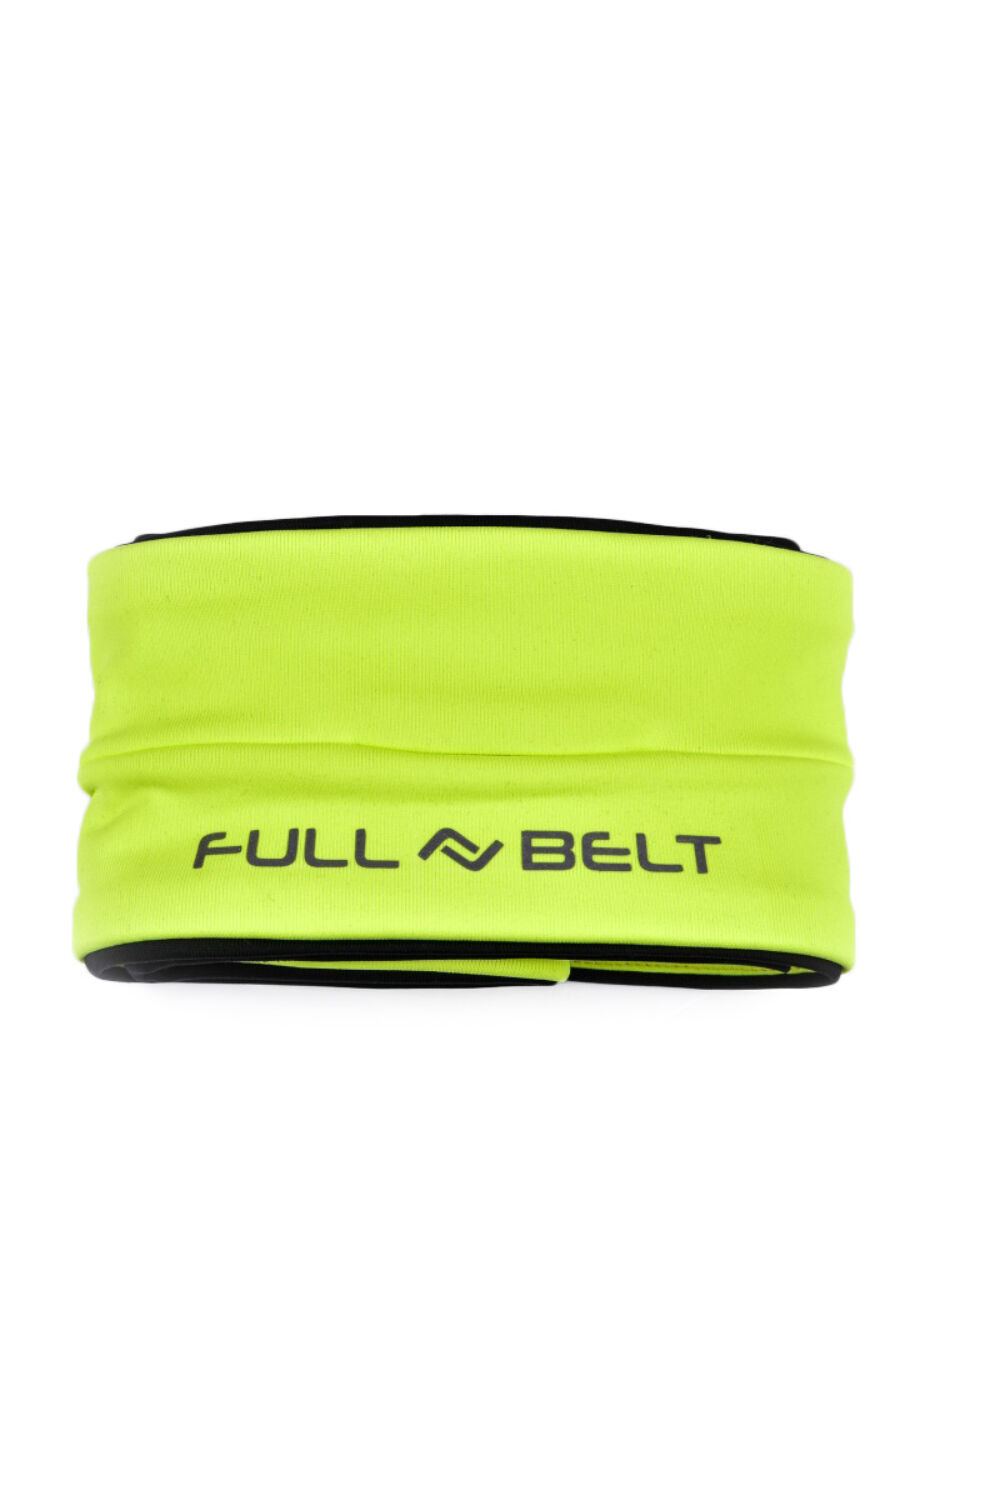 Indi-Go Full-Belt futóöv fekete-neonsárga 'M'